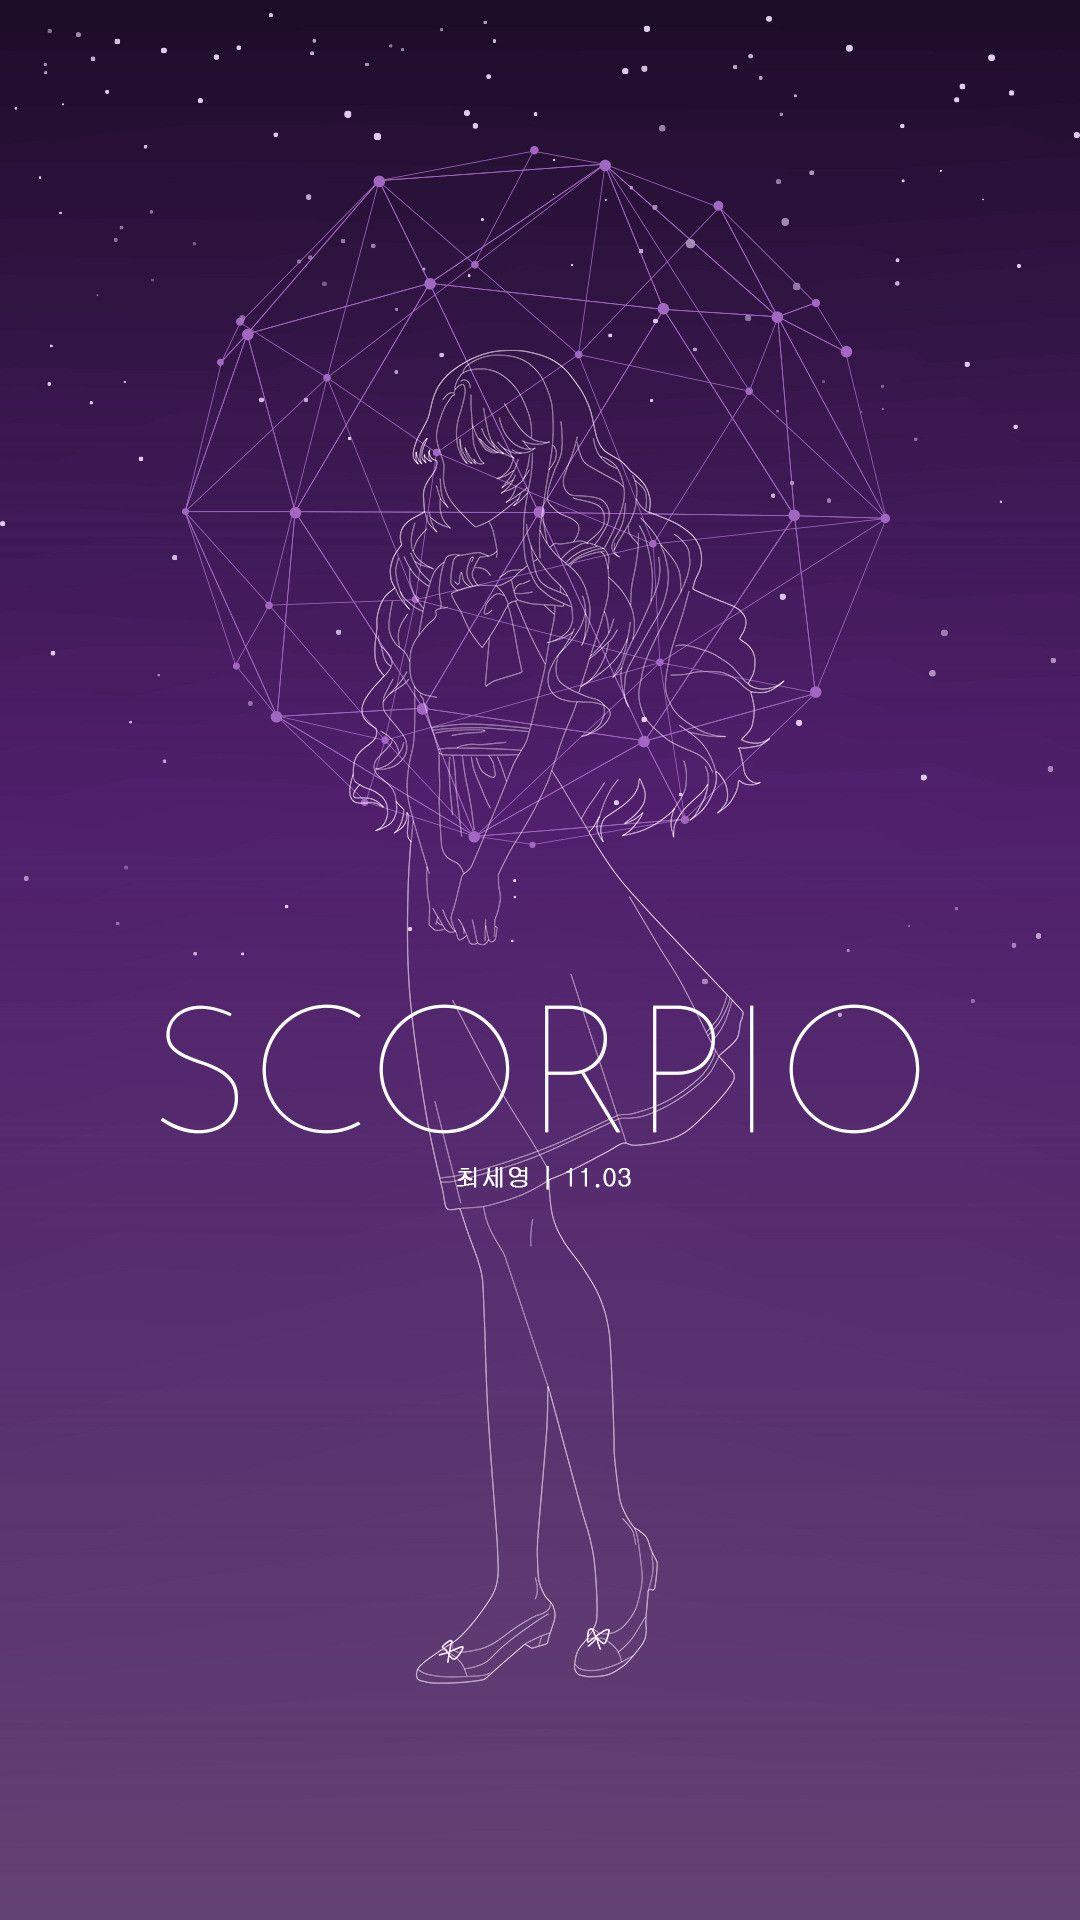 Wallpaper the dark background symbol Scorpio zodiac sign astrology  images for desktop section разное  download